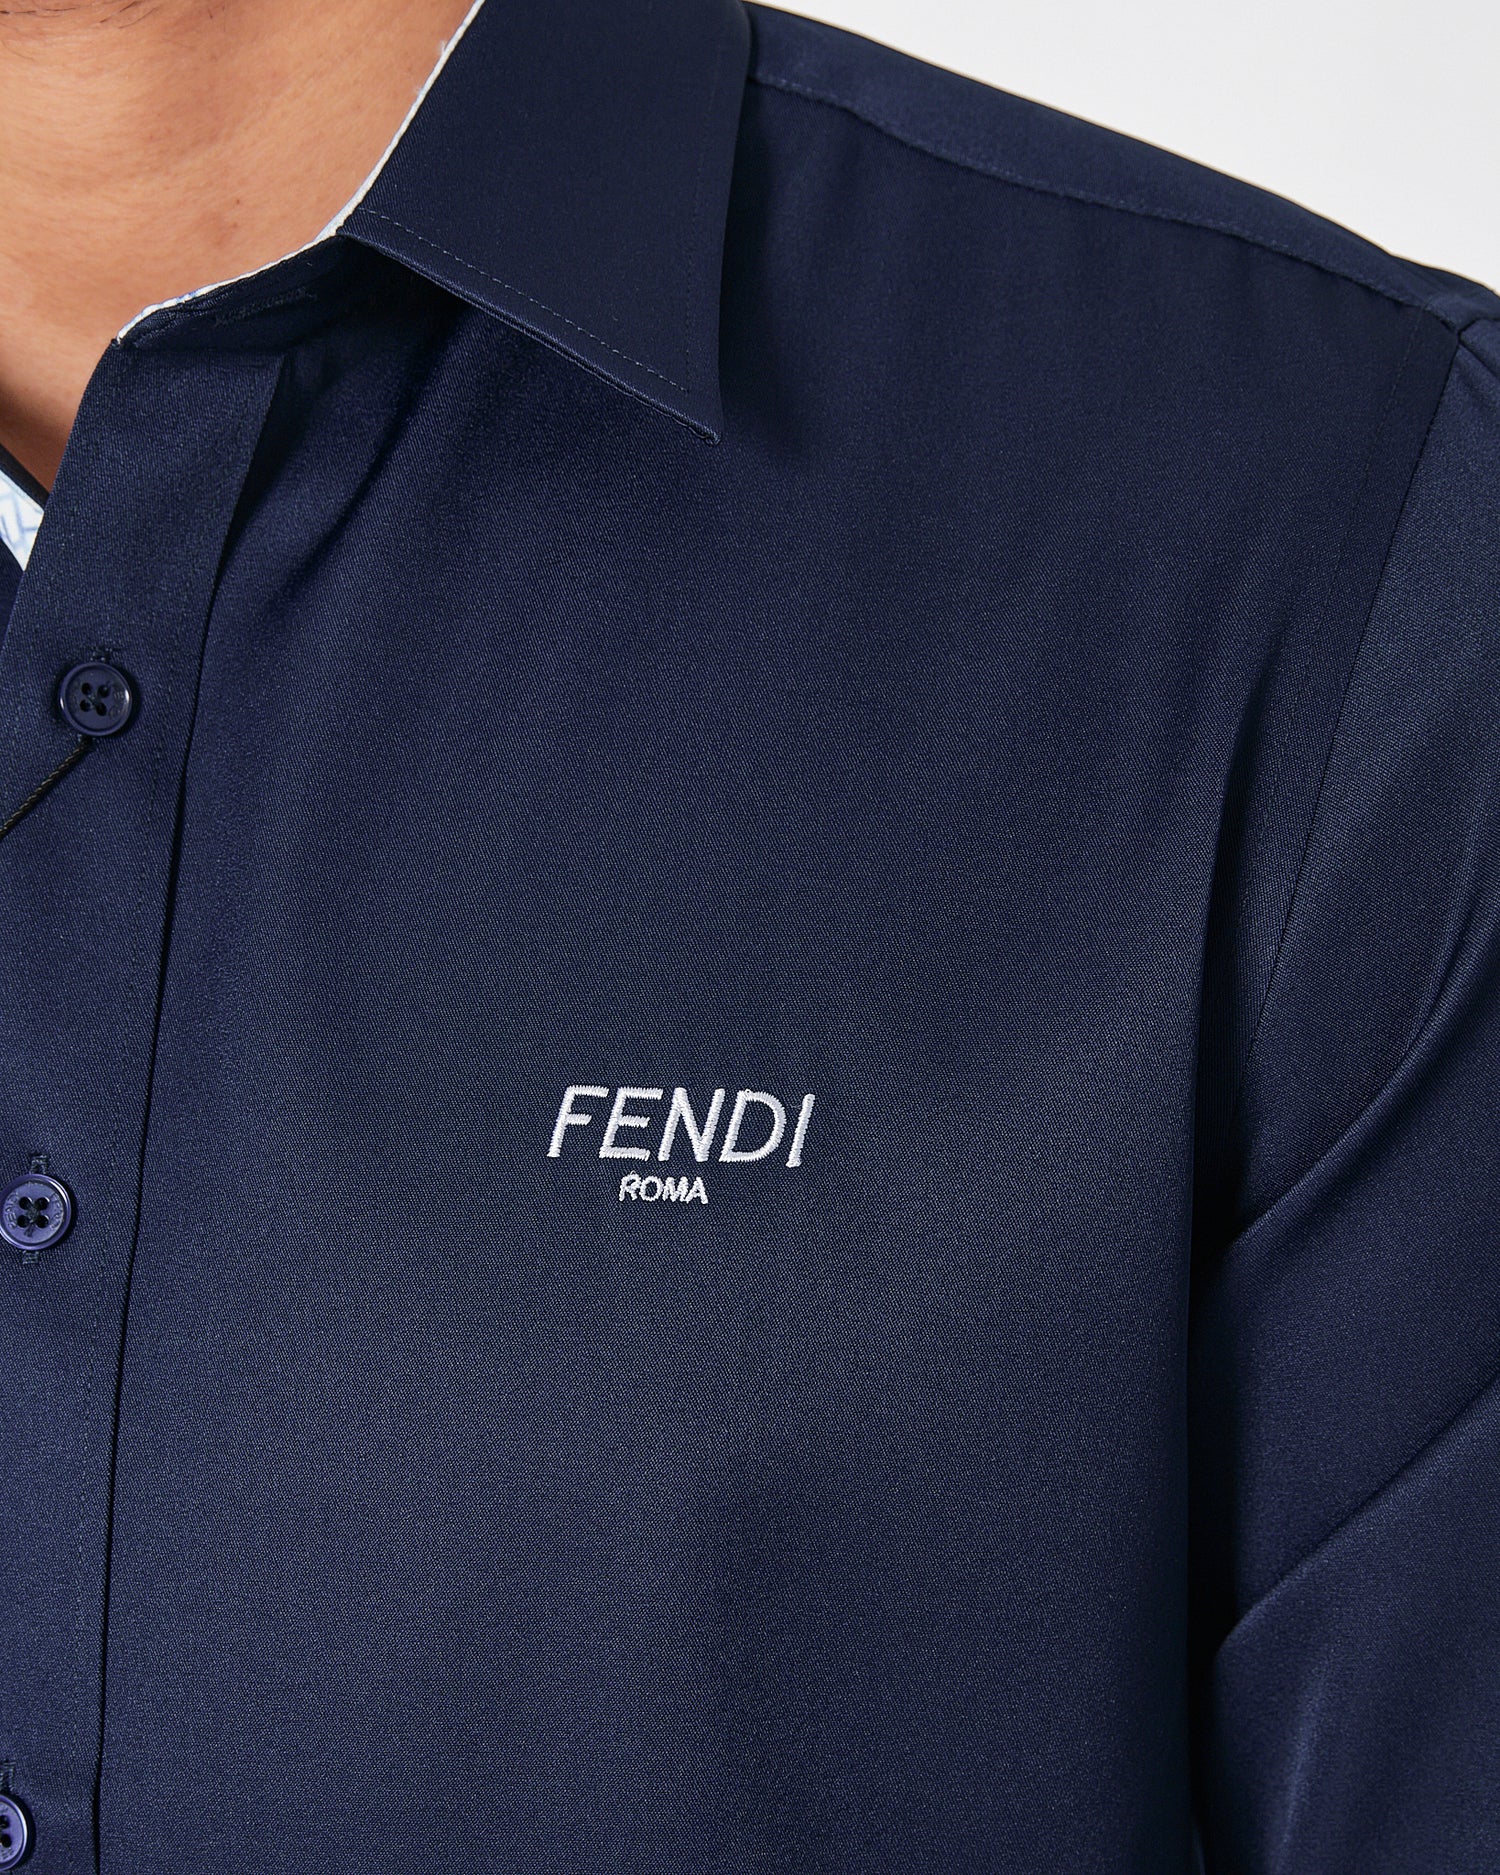 FEN Logo Embroidered Men Blue Shirts Long Sleeve 22.90